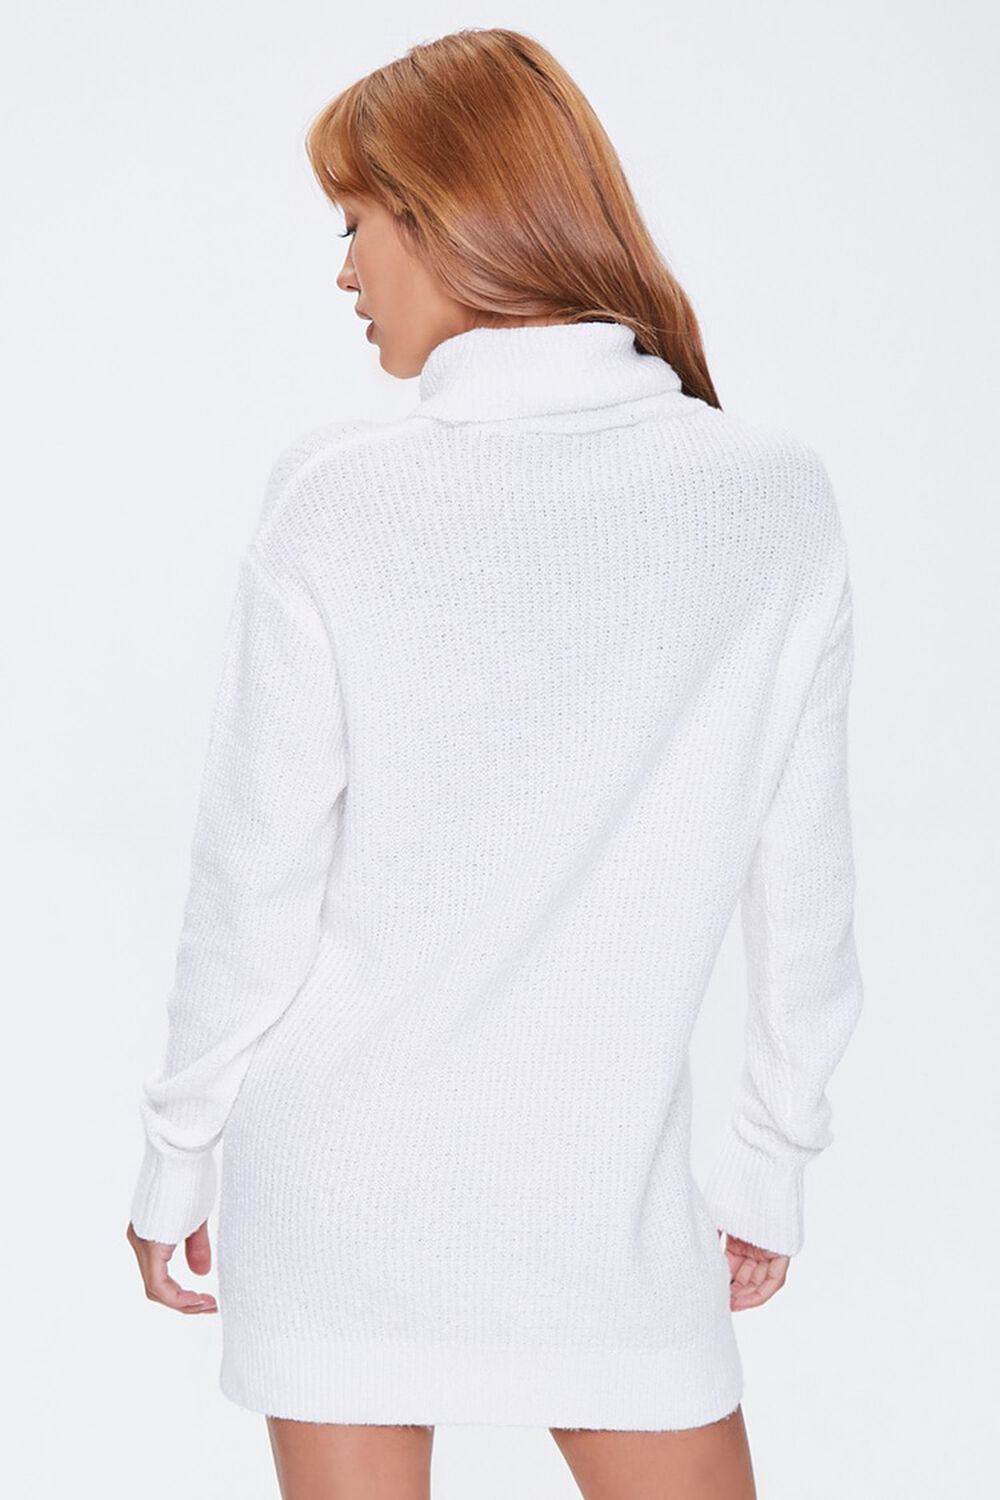 Ribbed Turtleneck Sweater Dress, image 3